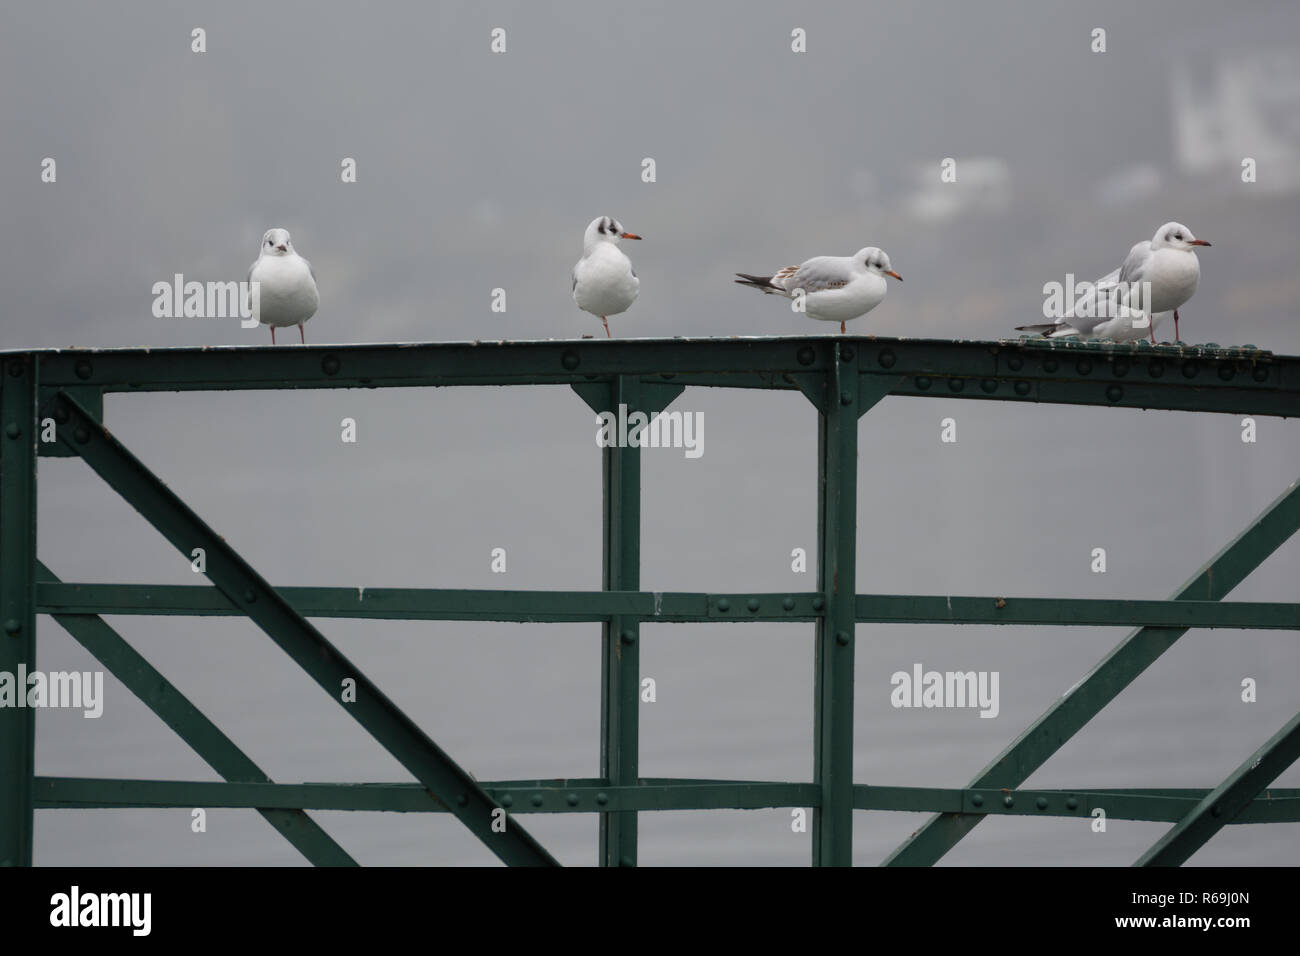 Several Gulls Sitting On A Metal Railing Stock Photo